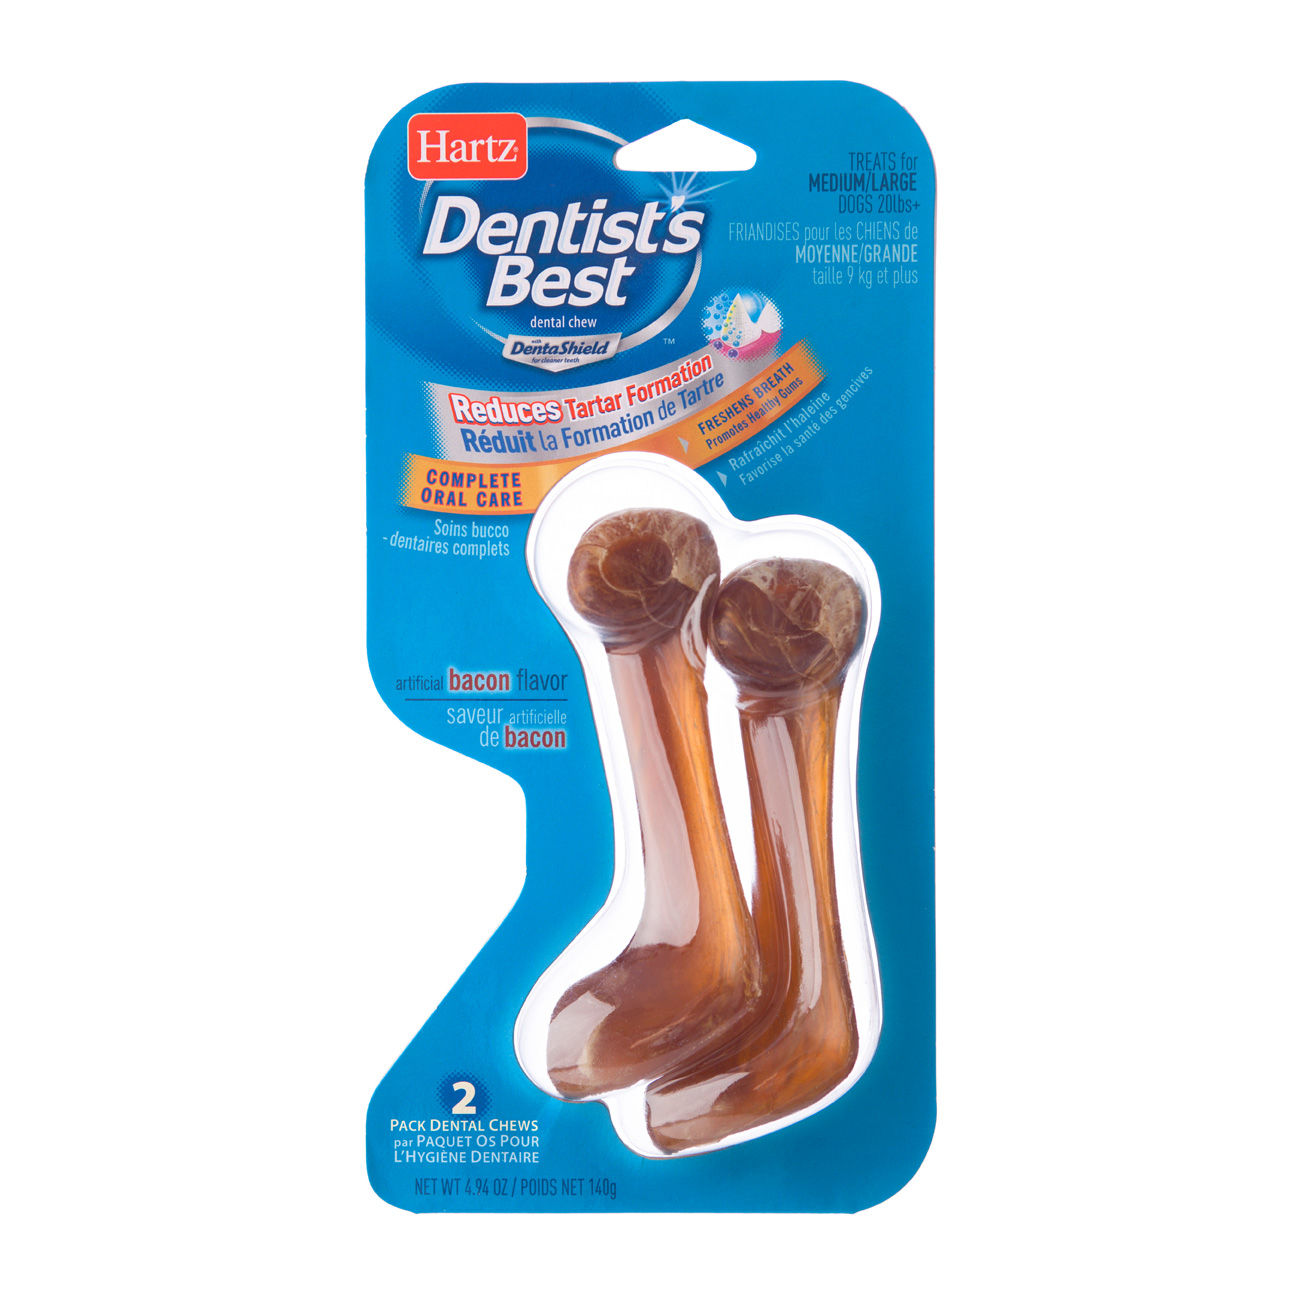 best dental treats for dogs